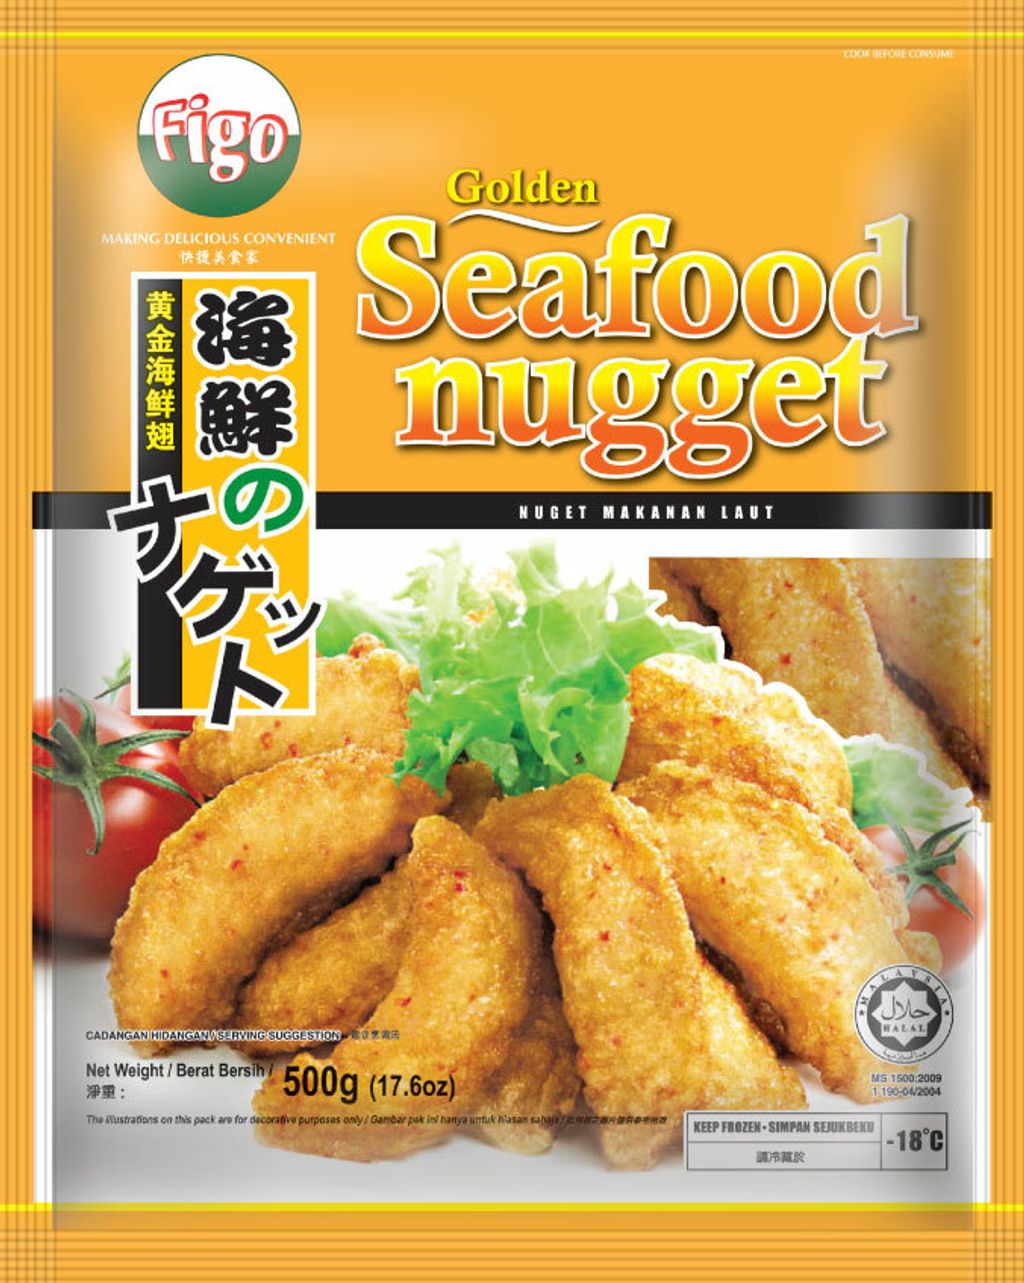 figo-golden seafood nugget.jpg